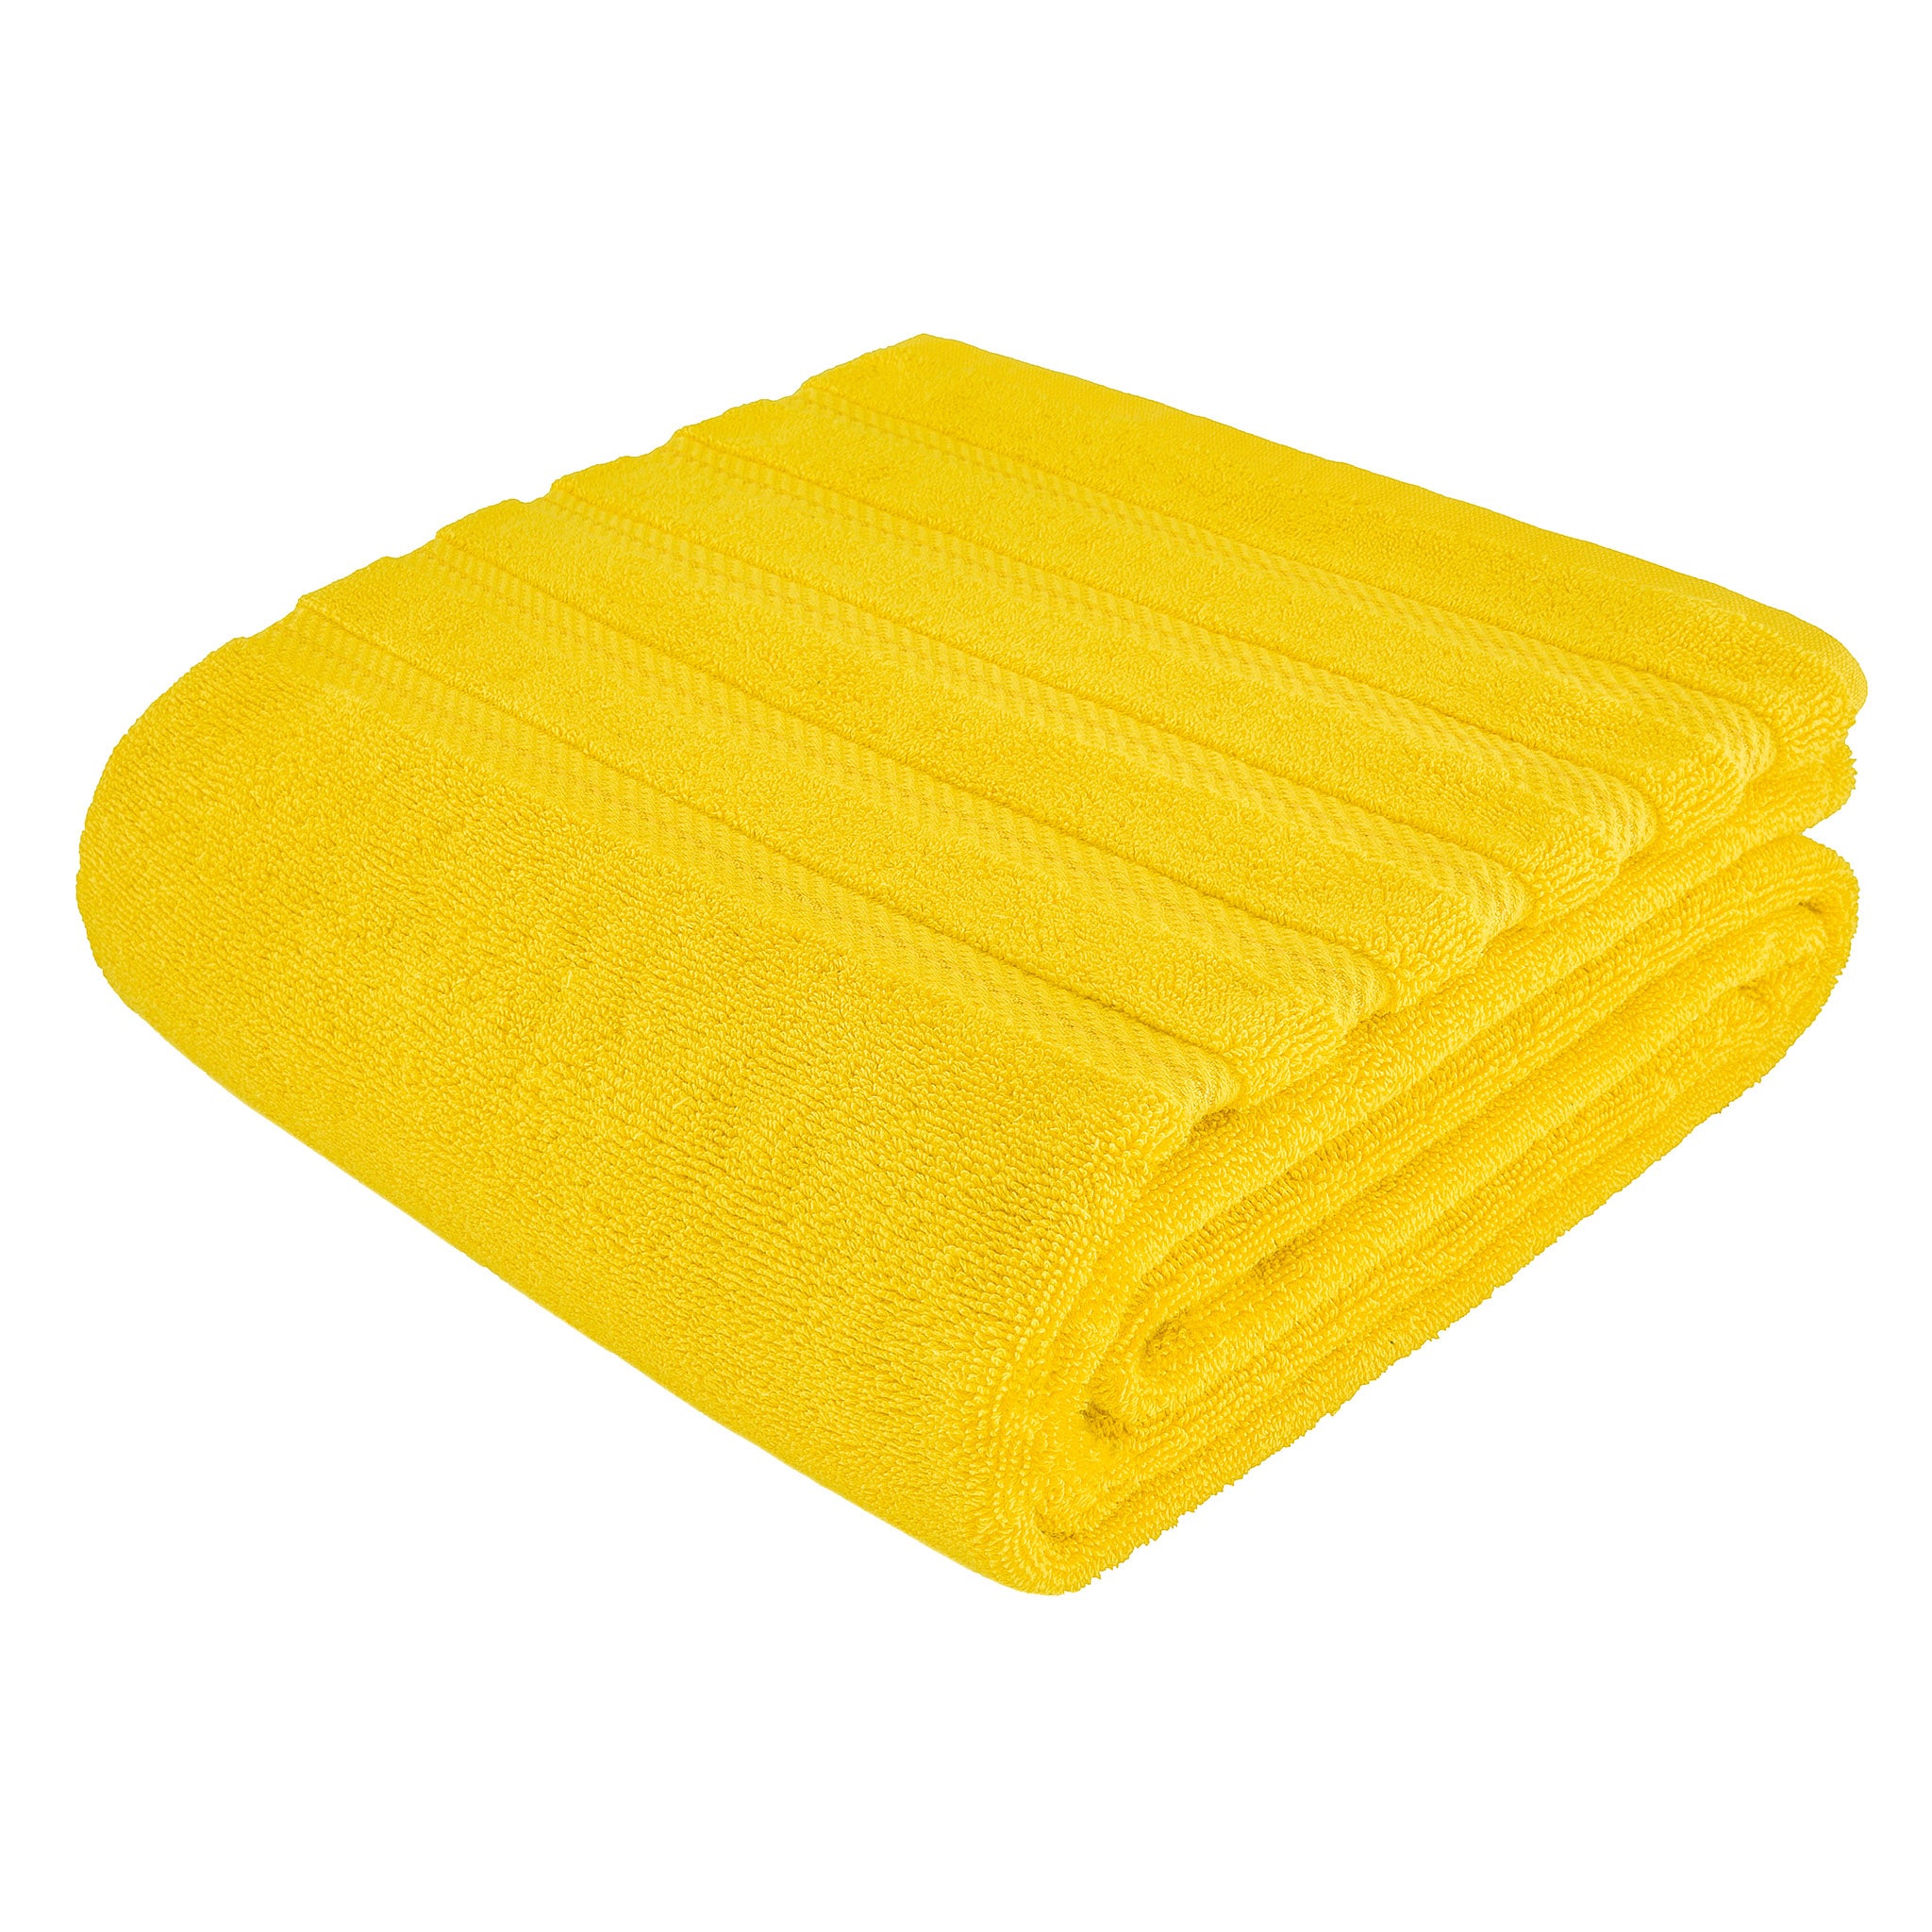 American Soft Linen 35x70 Inch 100% Turkish Cotton Jumbo Bath Sheet yellow-7